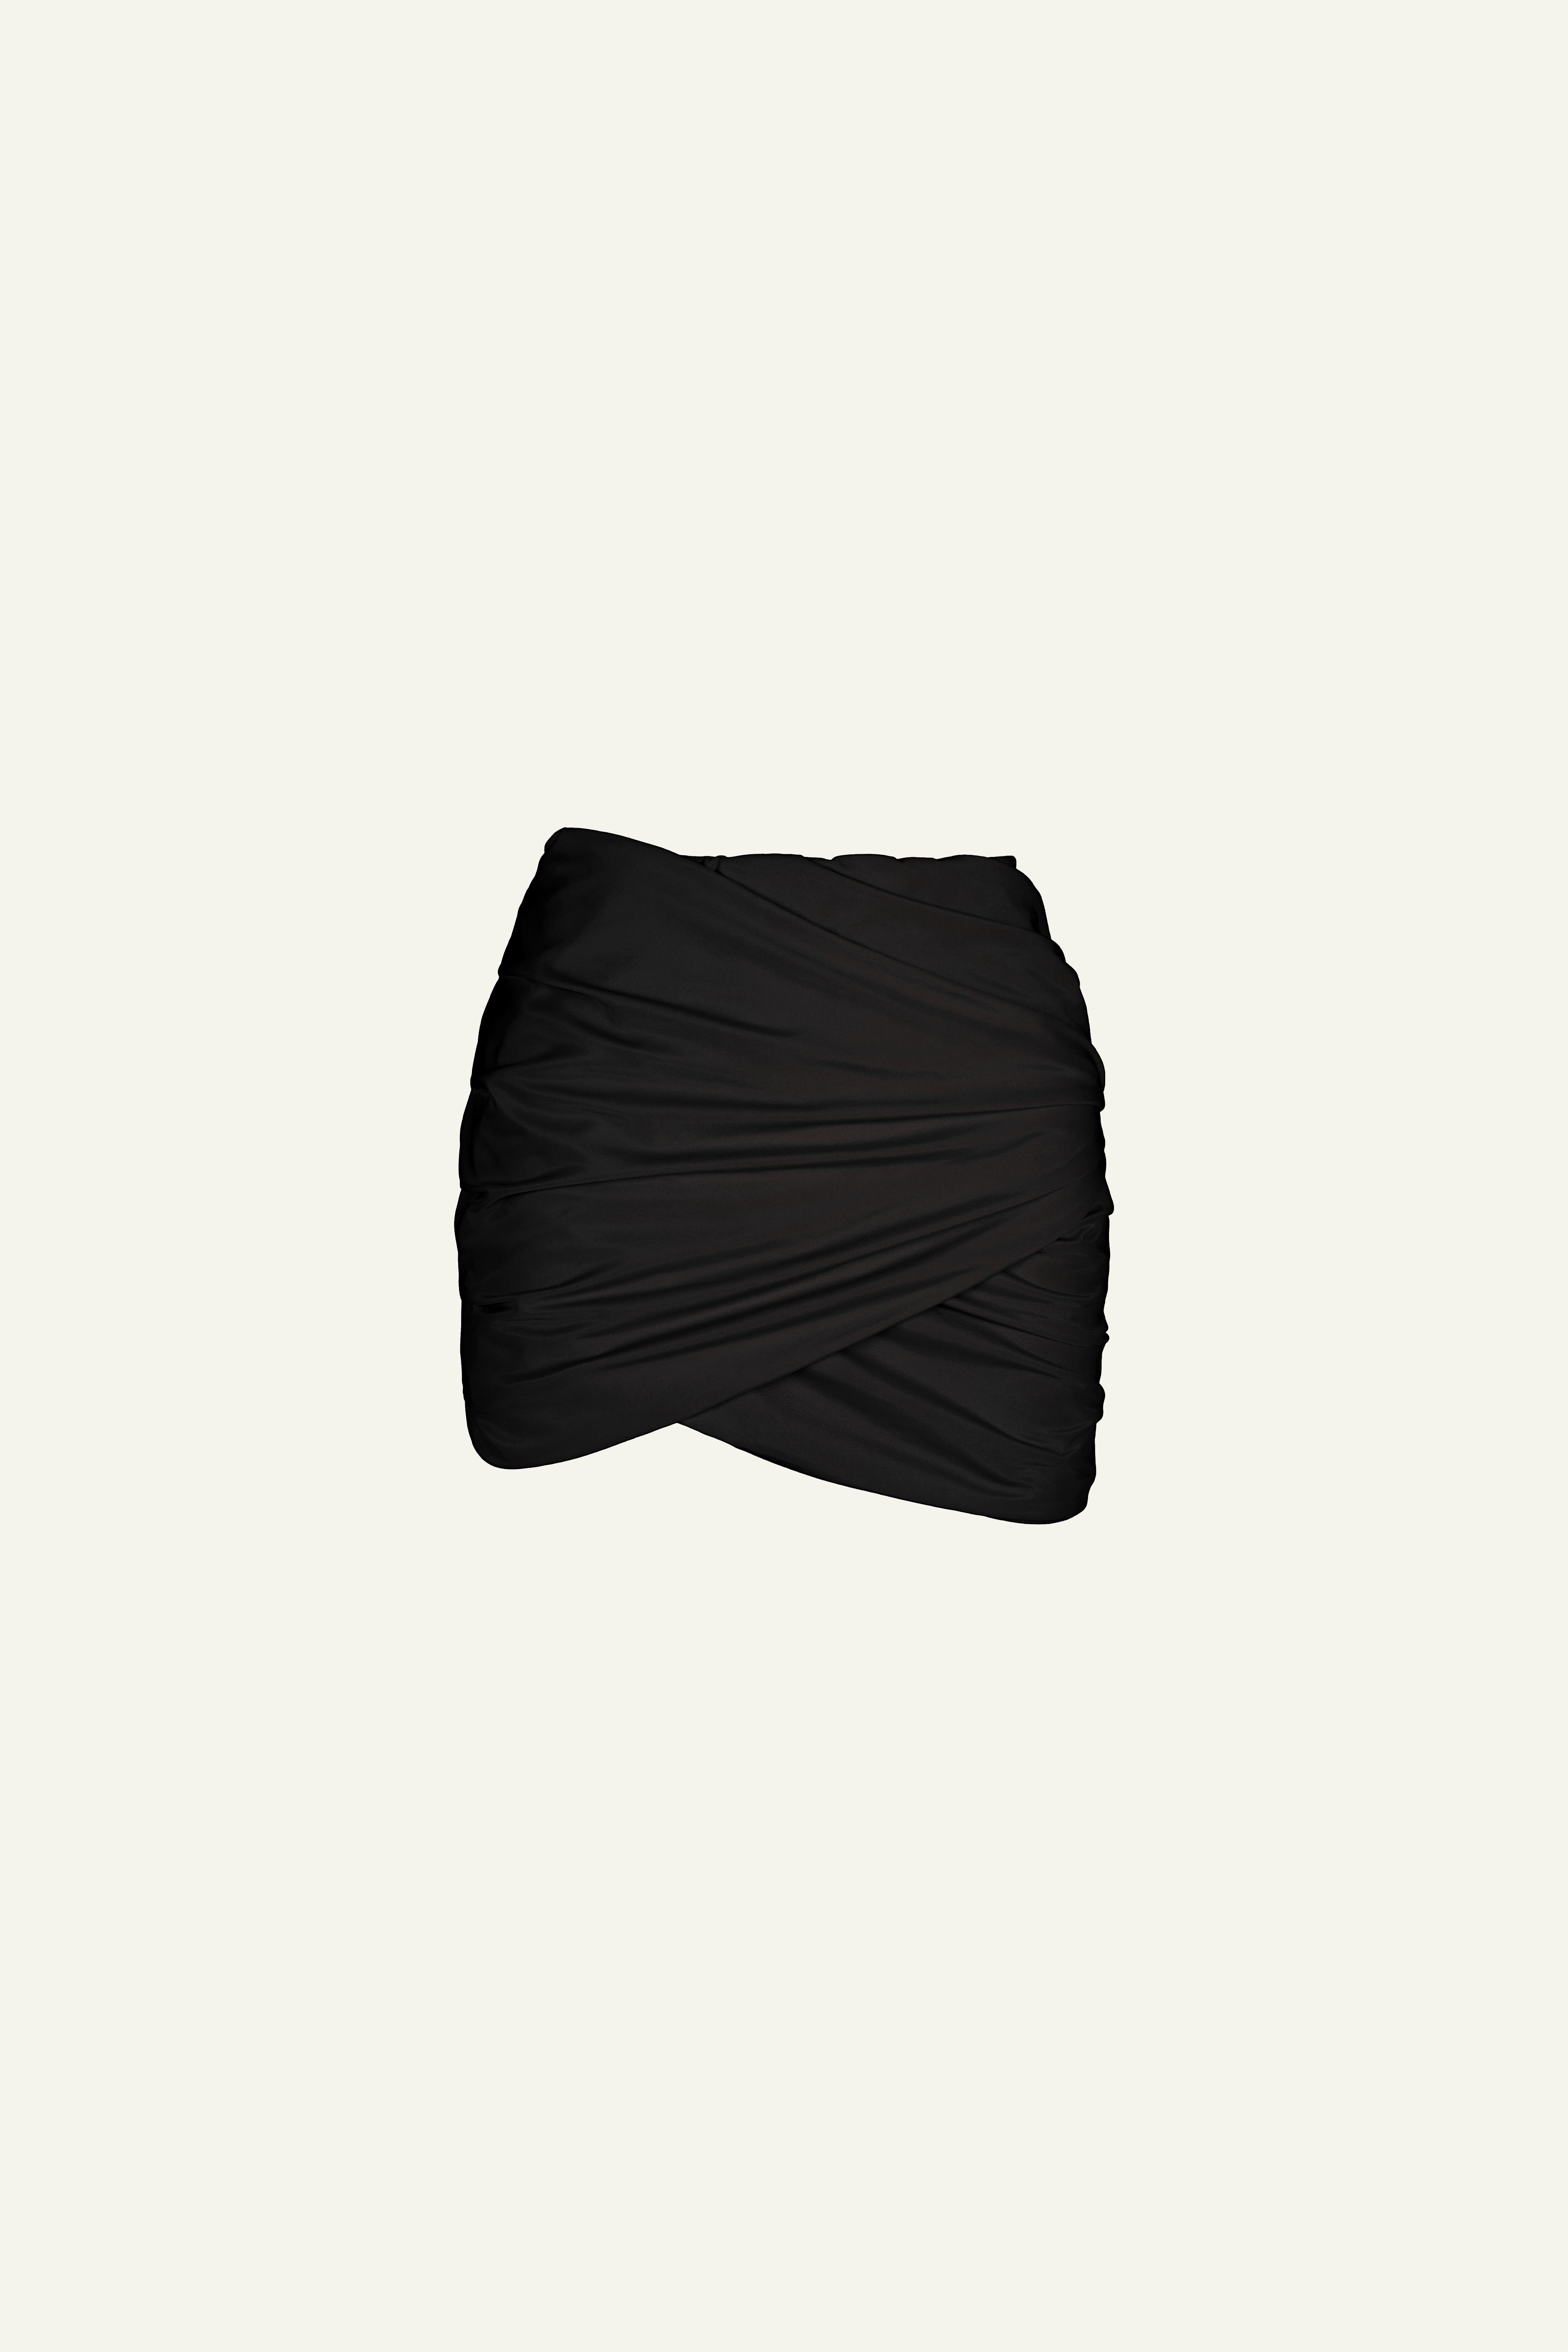 Mini gathered skirt (Limited Edition) Black - Ana